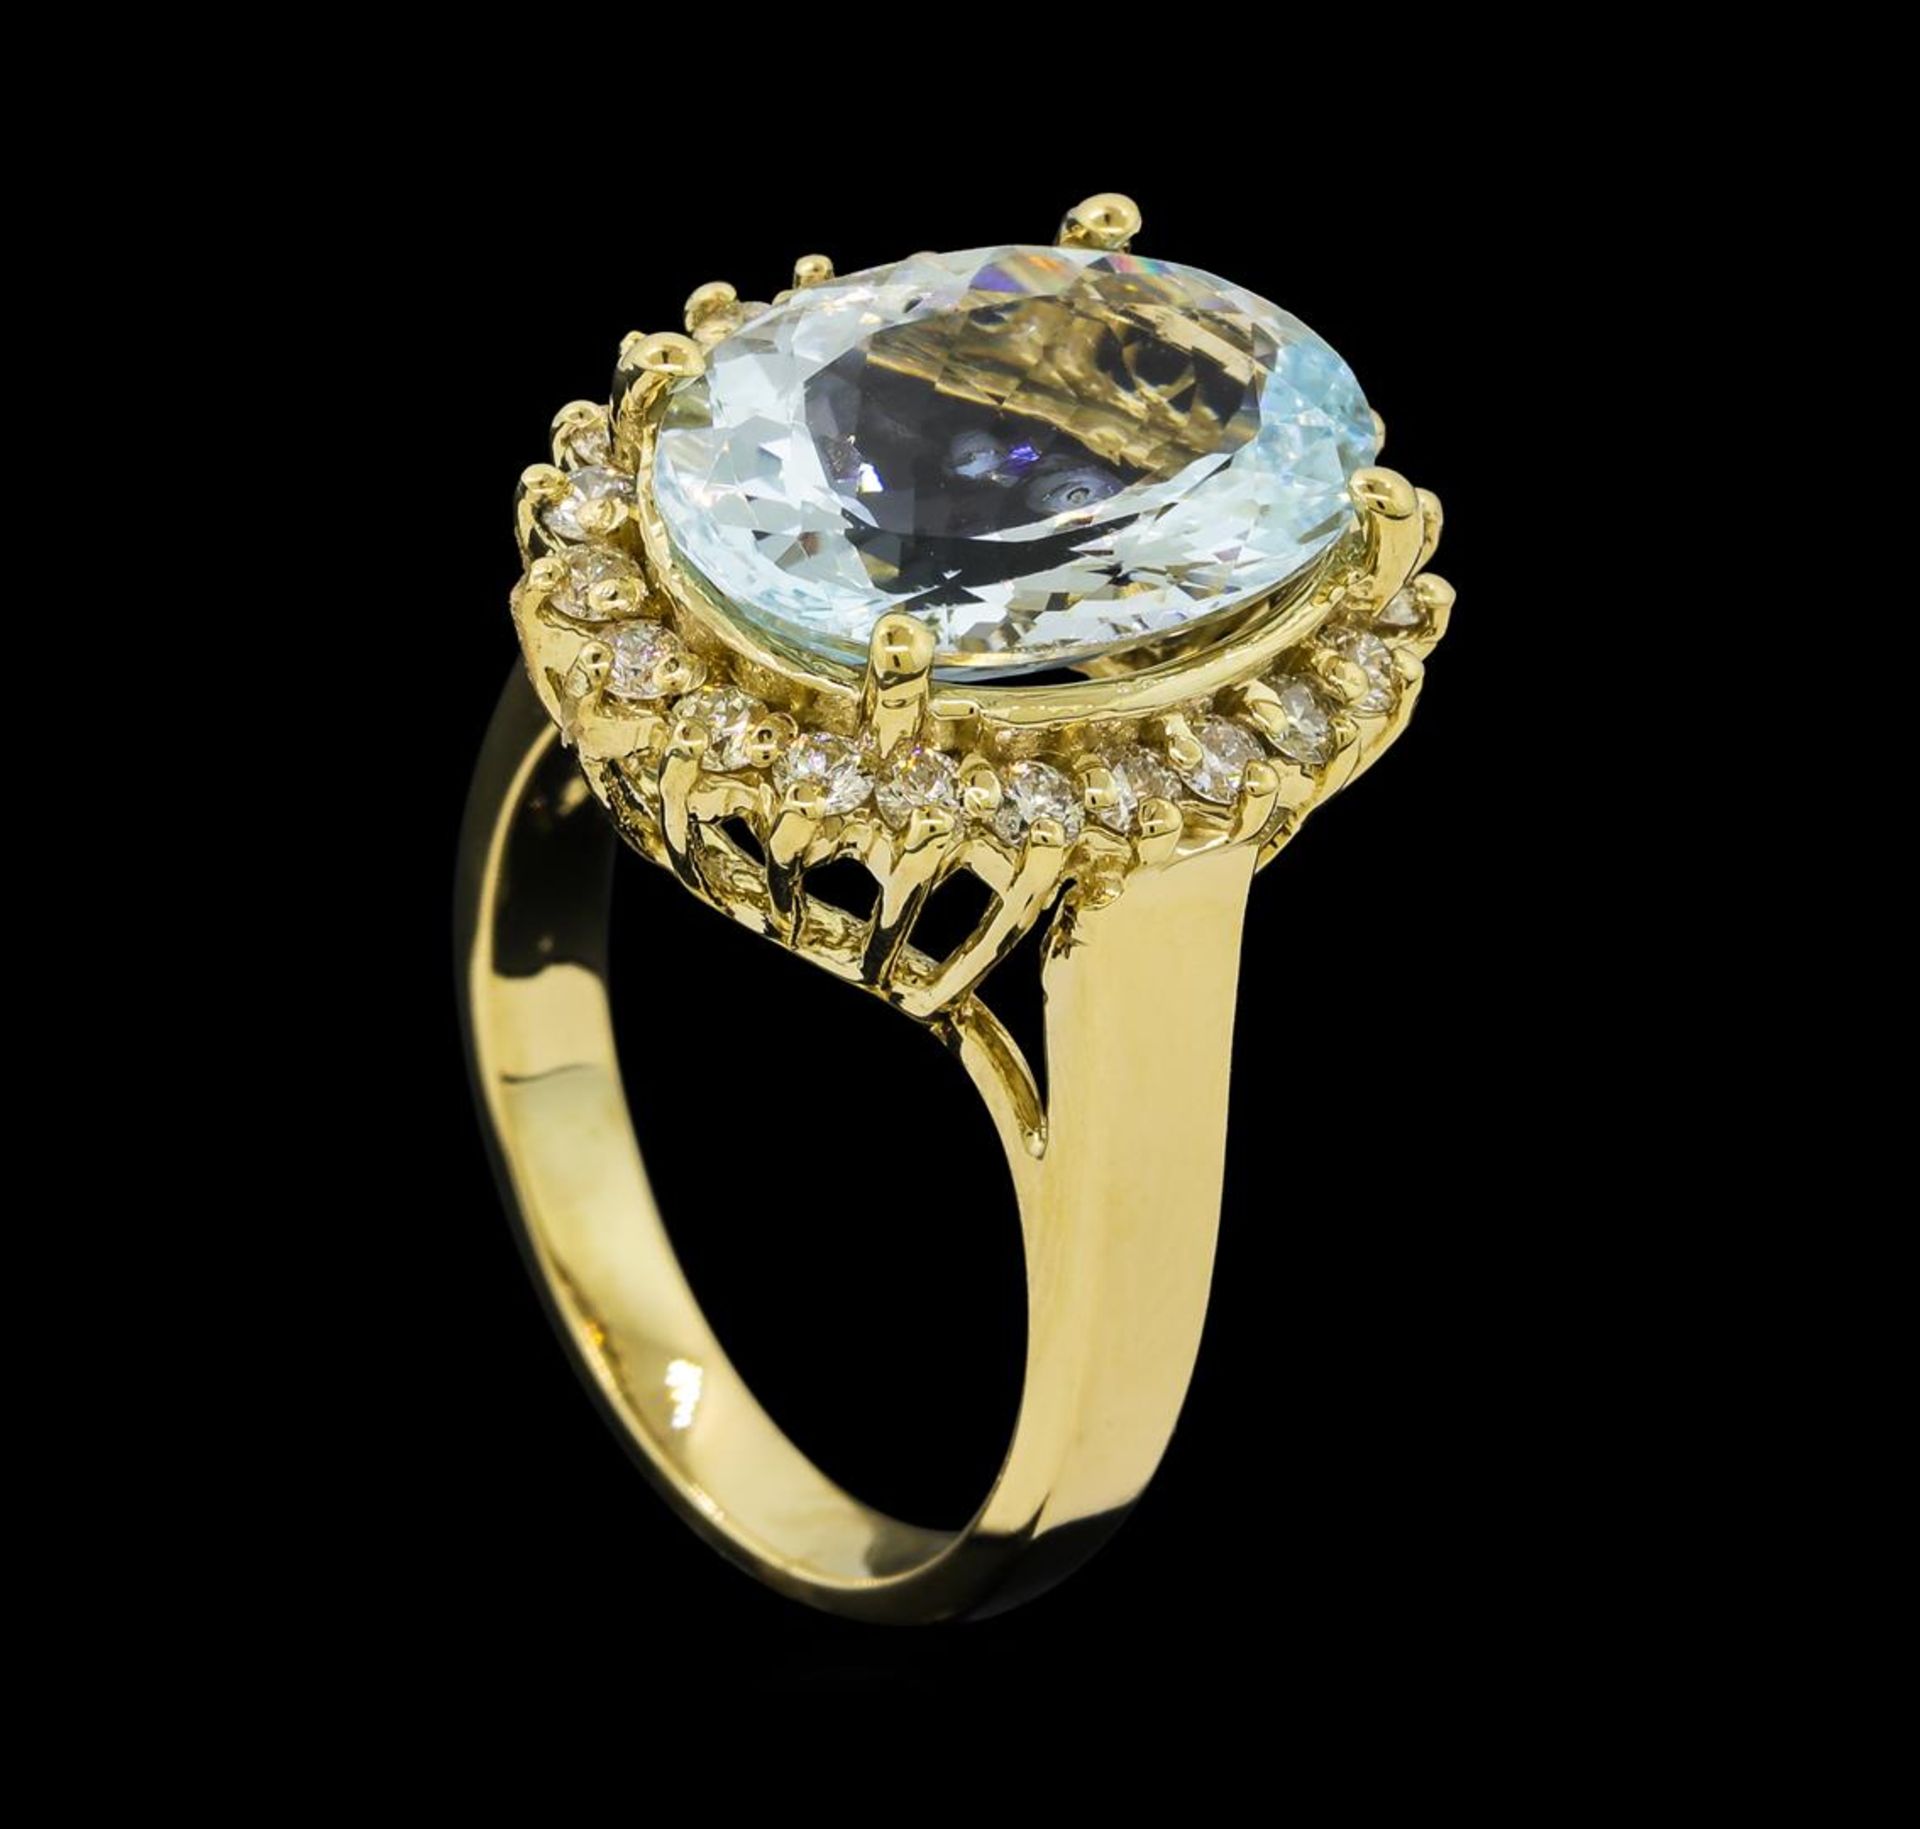 4.45 ctw Aquamarine and Diamond Ring - 14KT Yellow Gold - Image 4 of 4